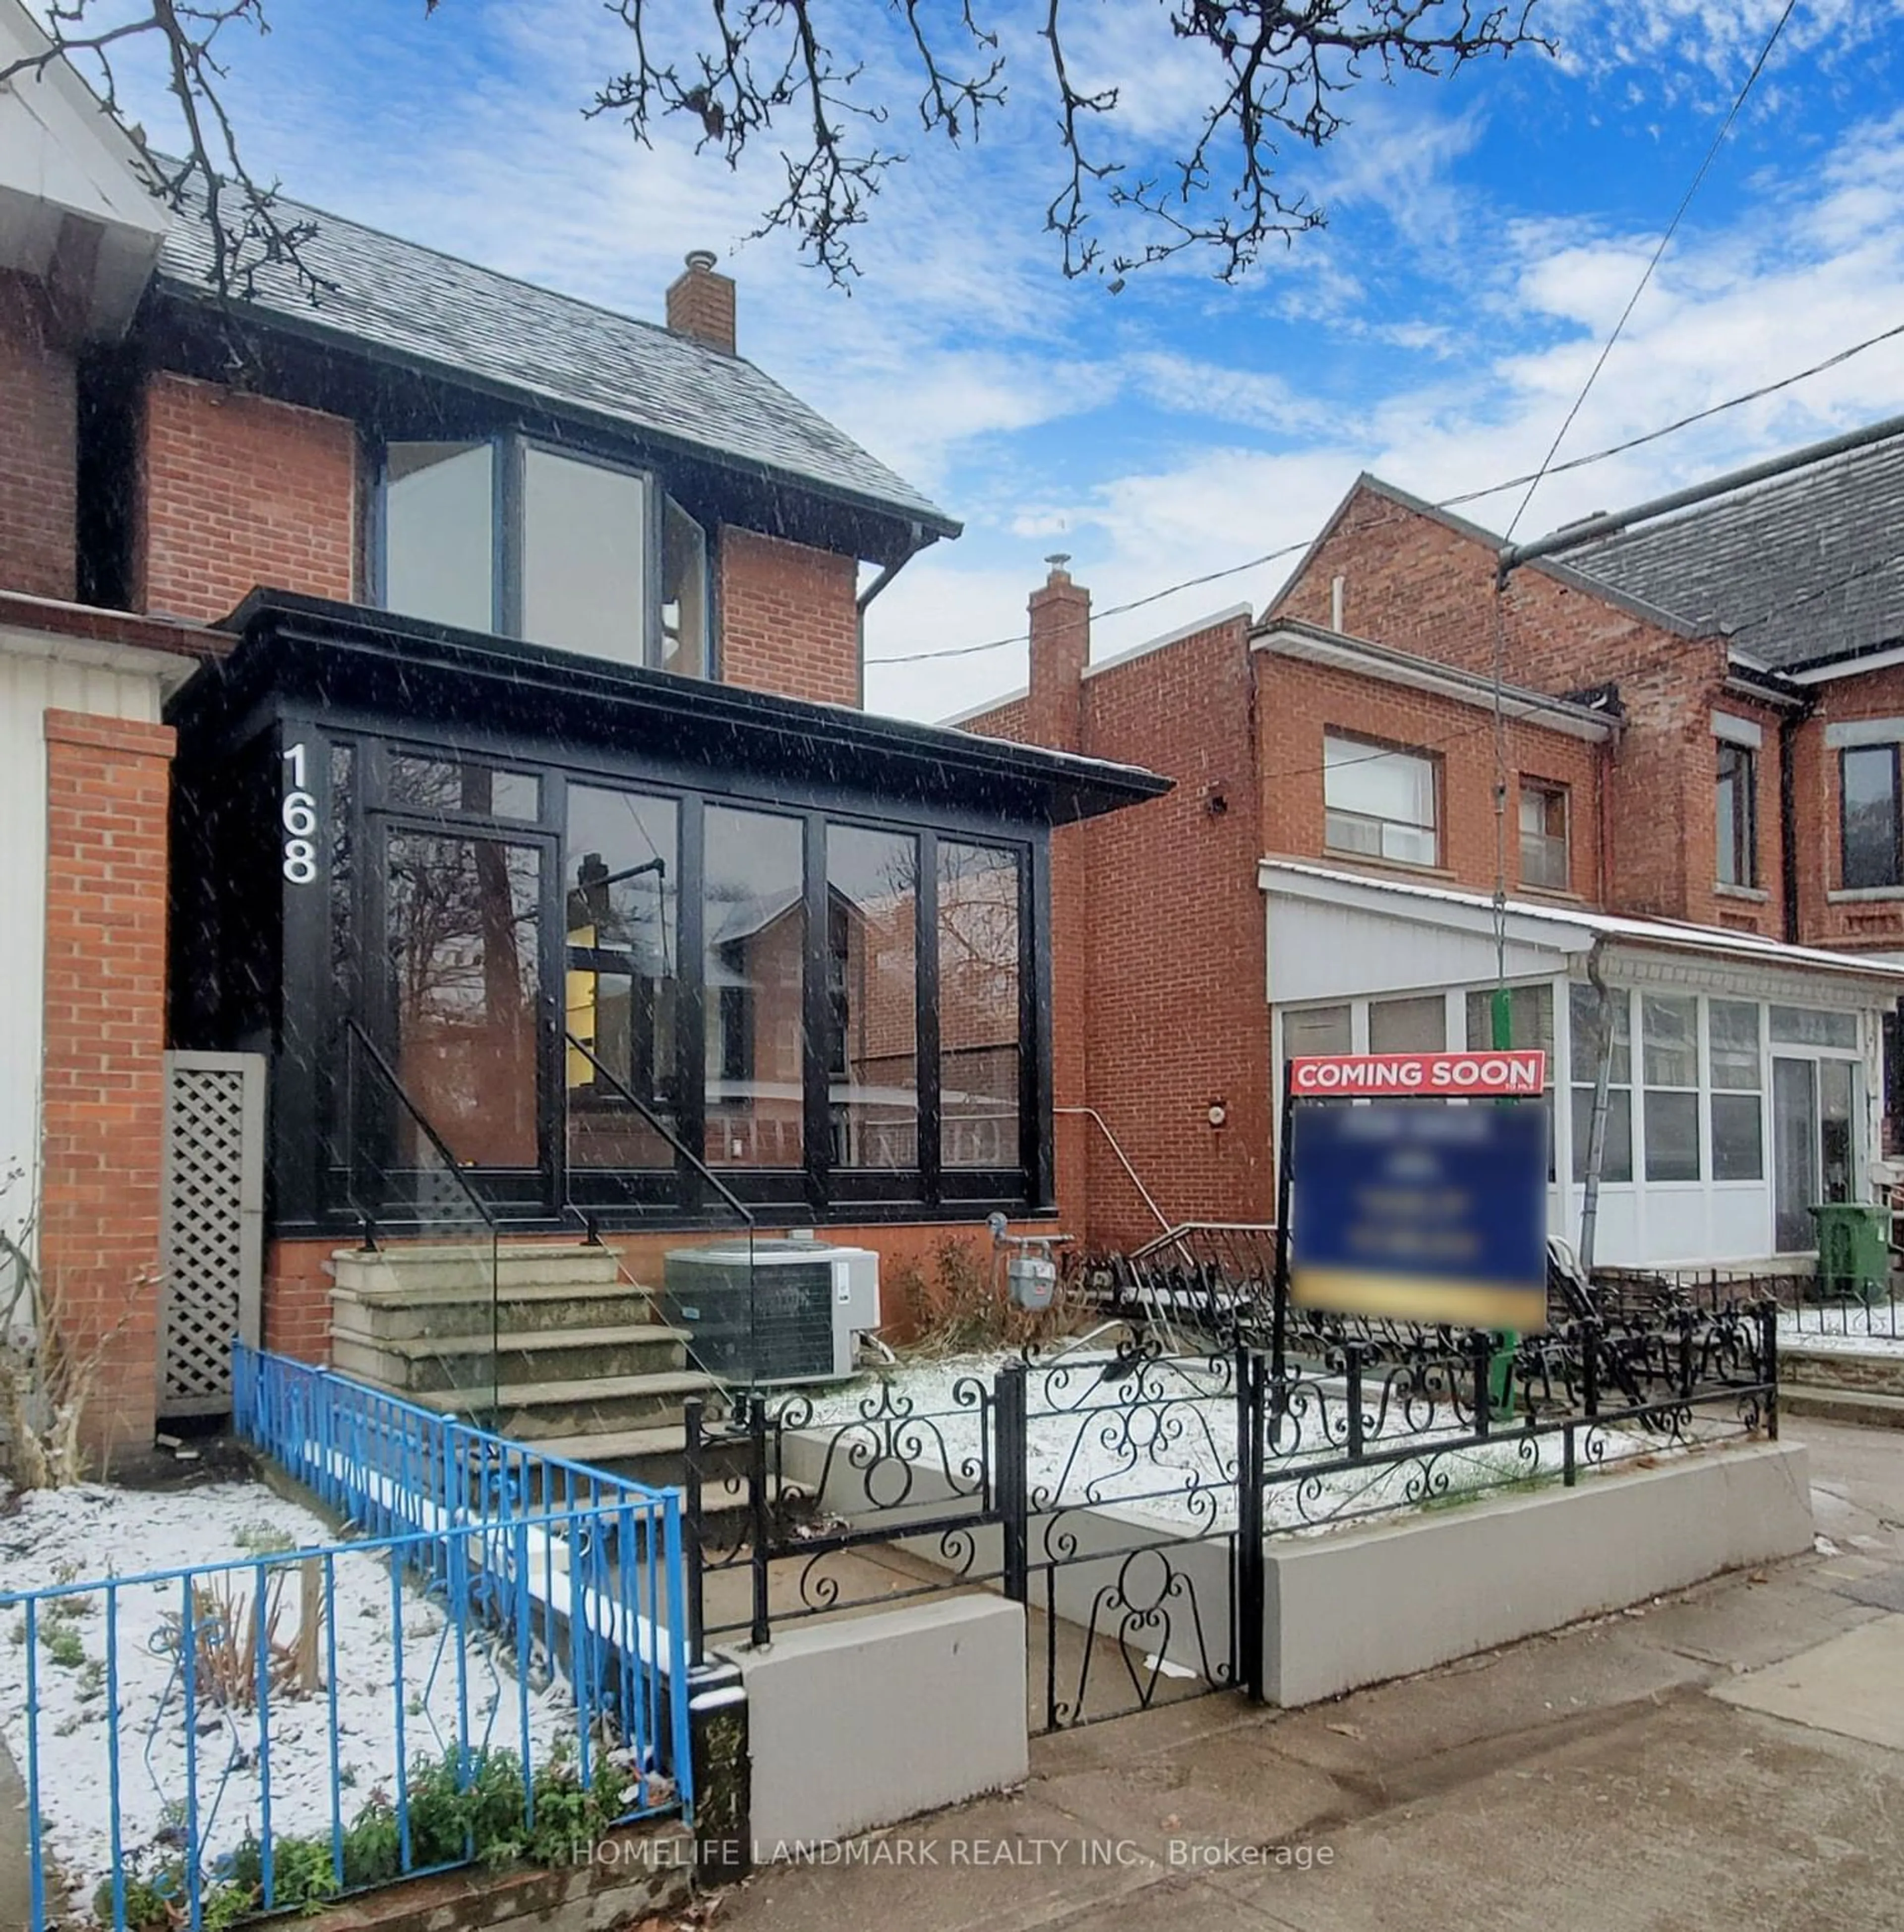 Home with brick exterior material for 168 Lansdowne Ave, Toronto Ontario M6K 2V9